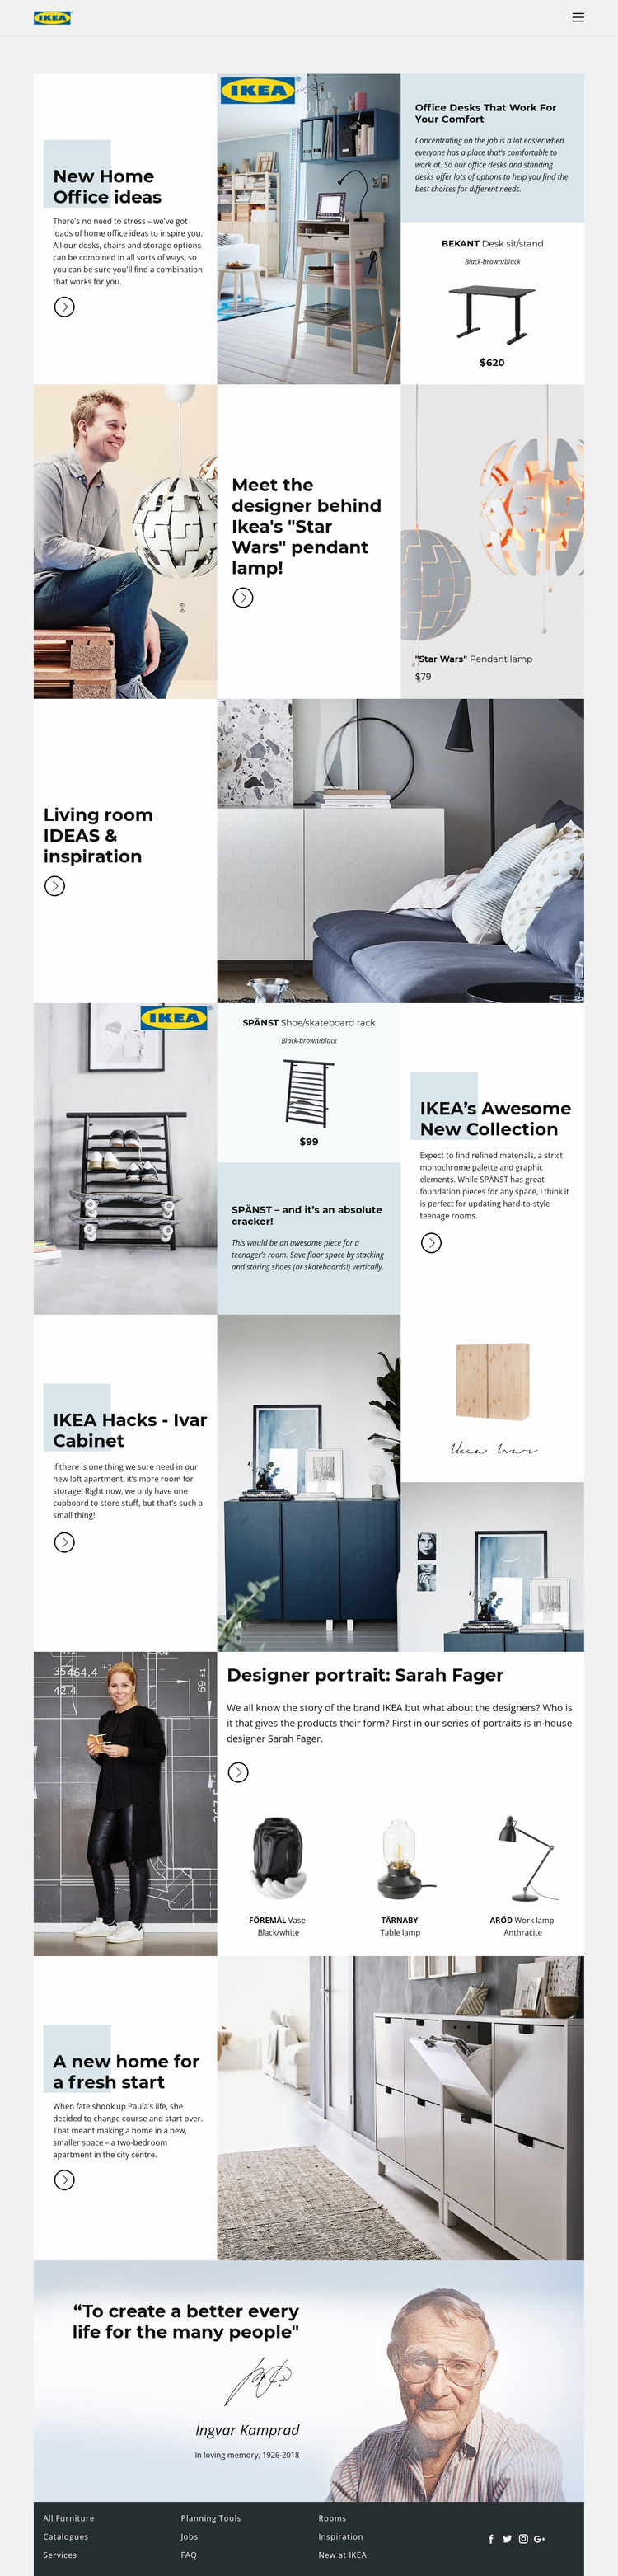 Inspiration from IKEA Website Design